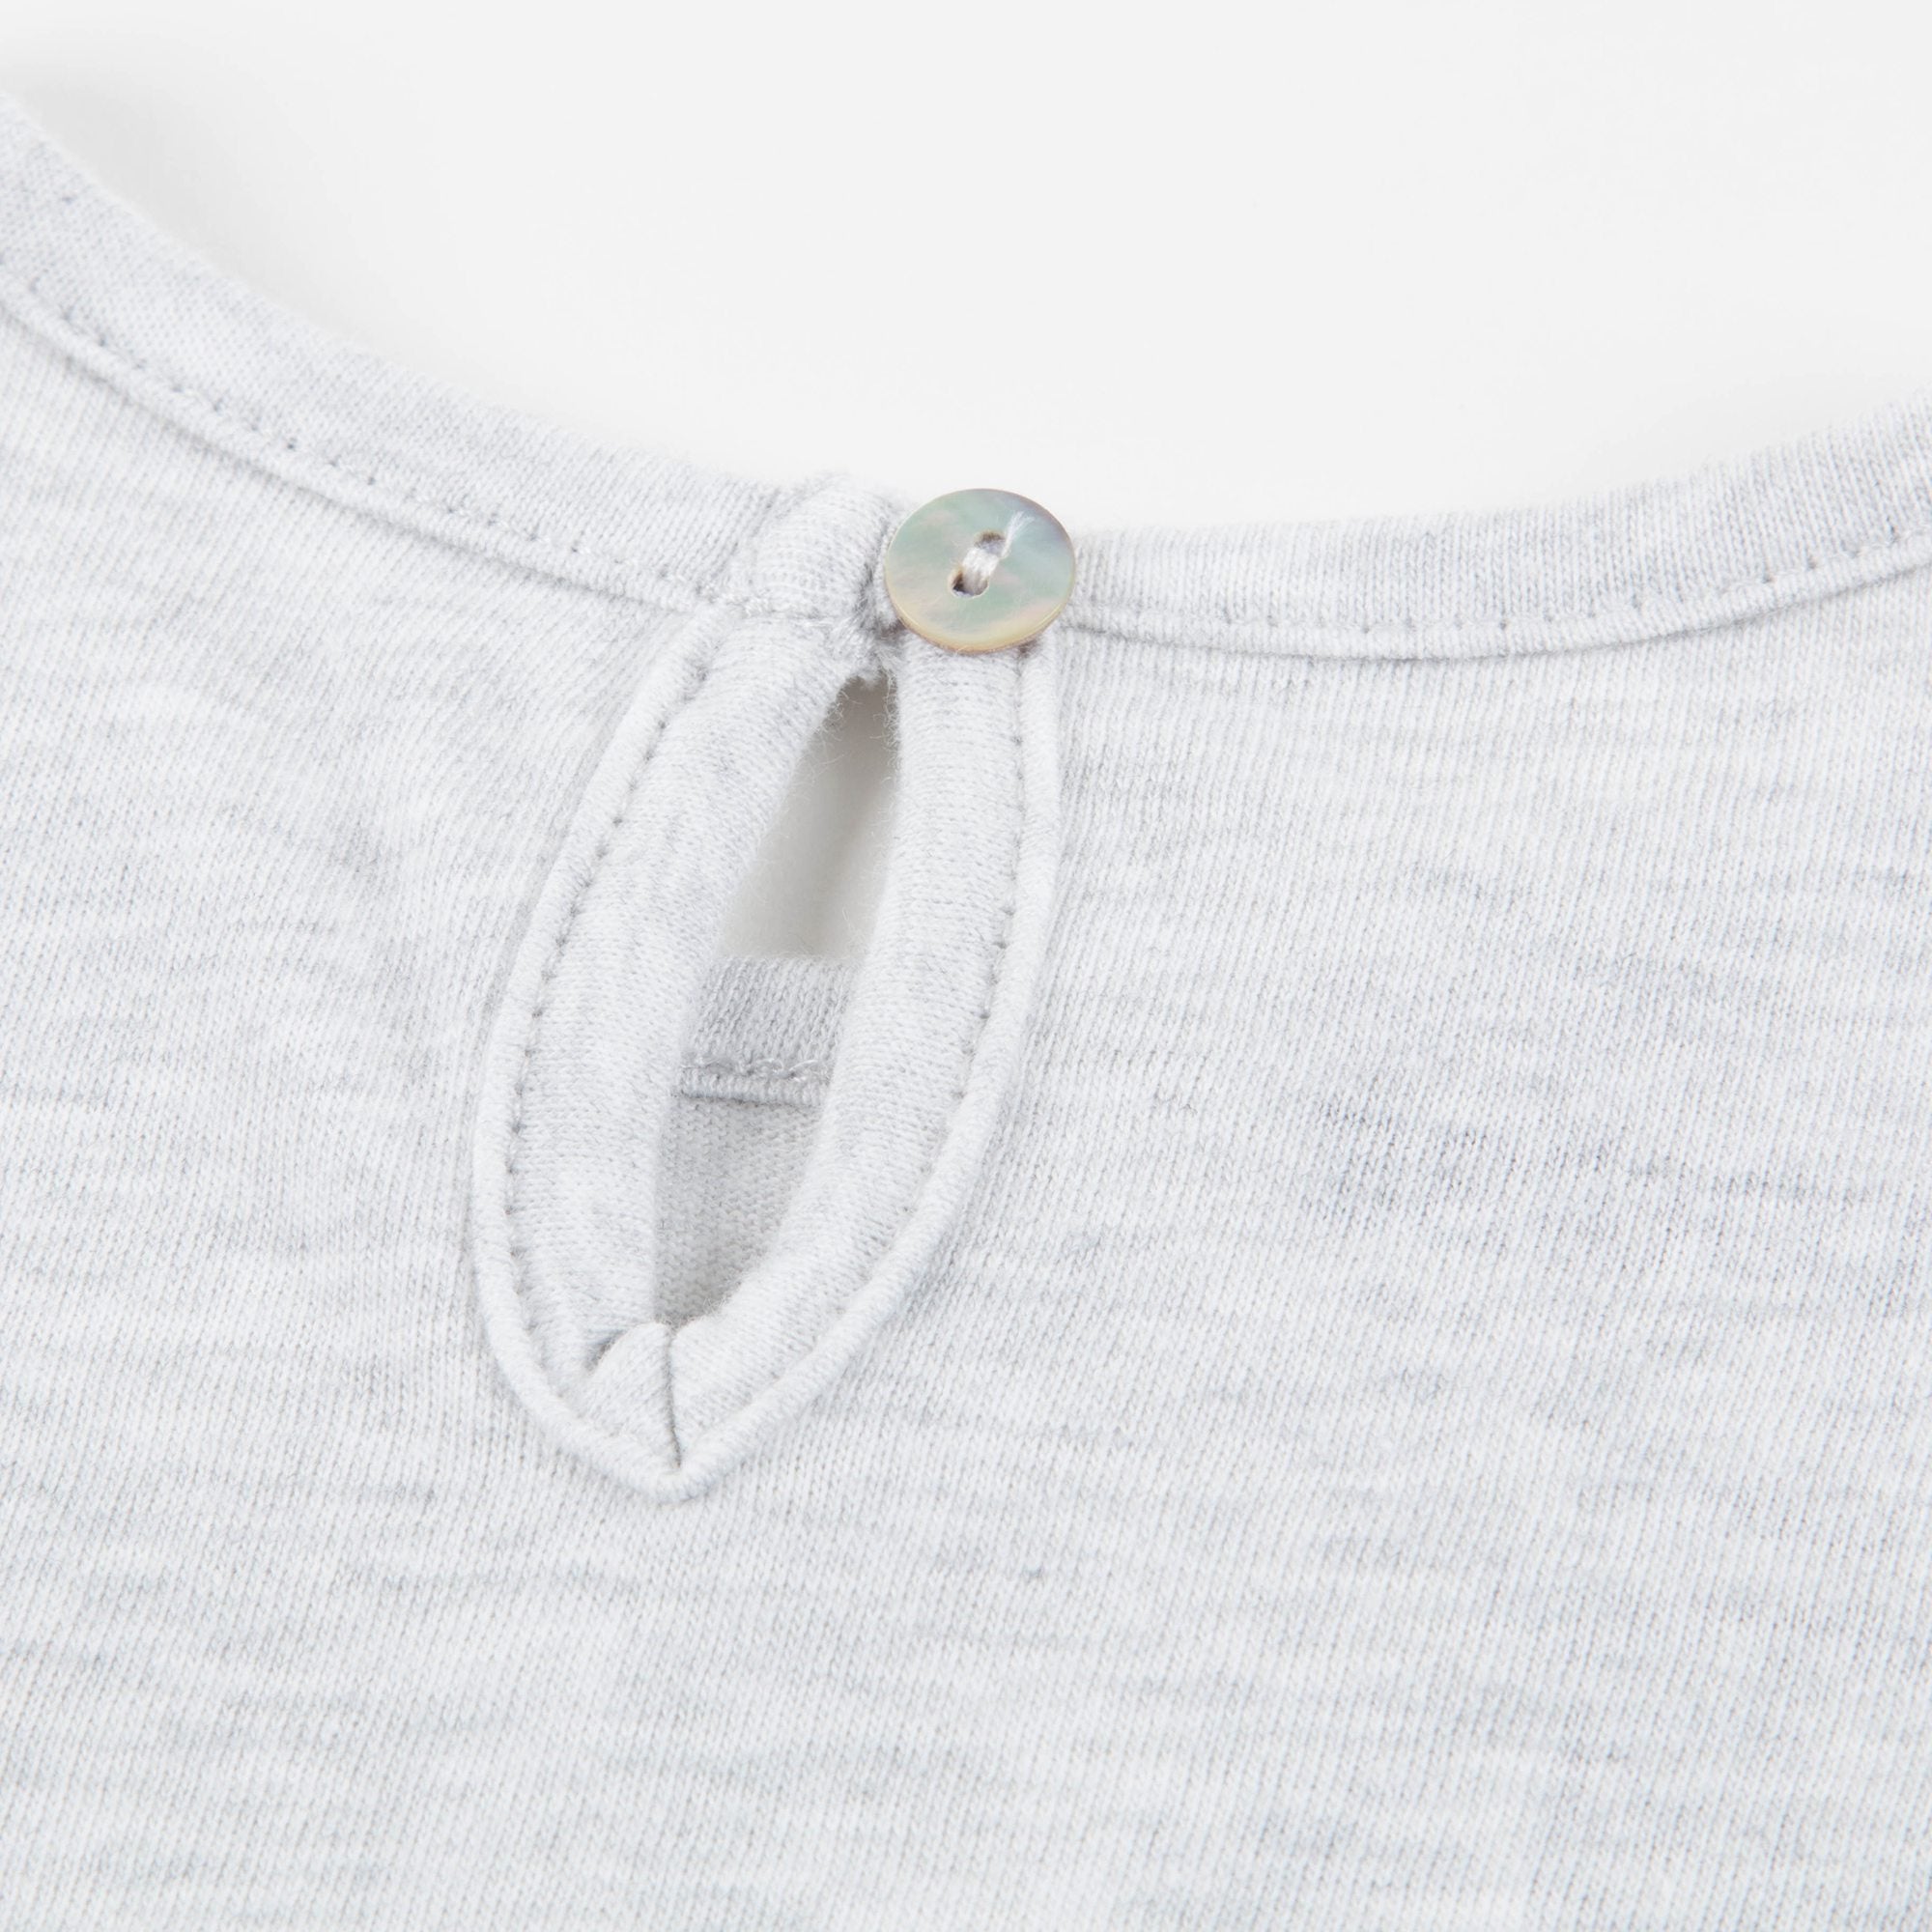 Baby Marled Grey "Jersey" Cotton T-shirt